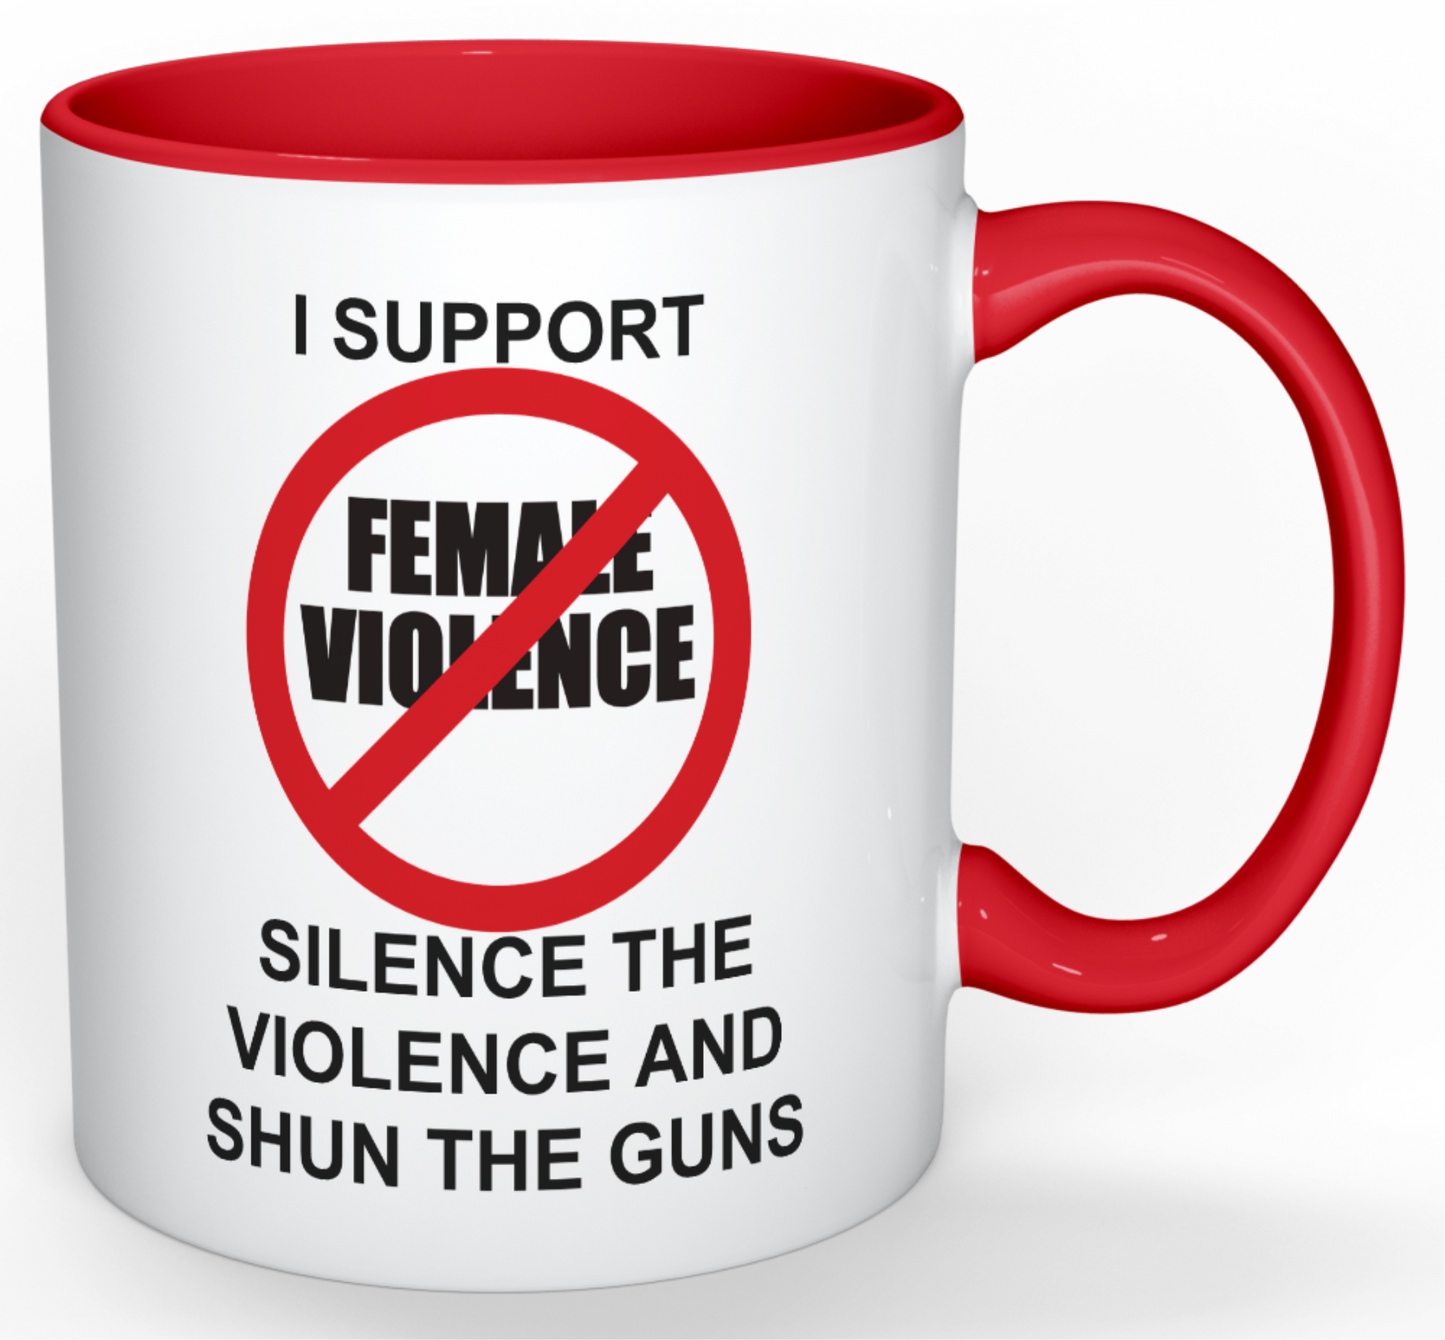 THE ANTI-VIOLENCE AGAINST FEMALES COFFEE MUG